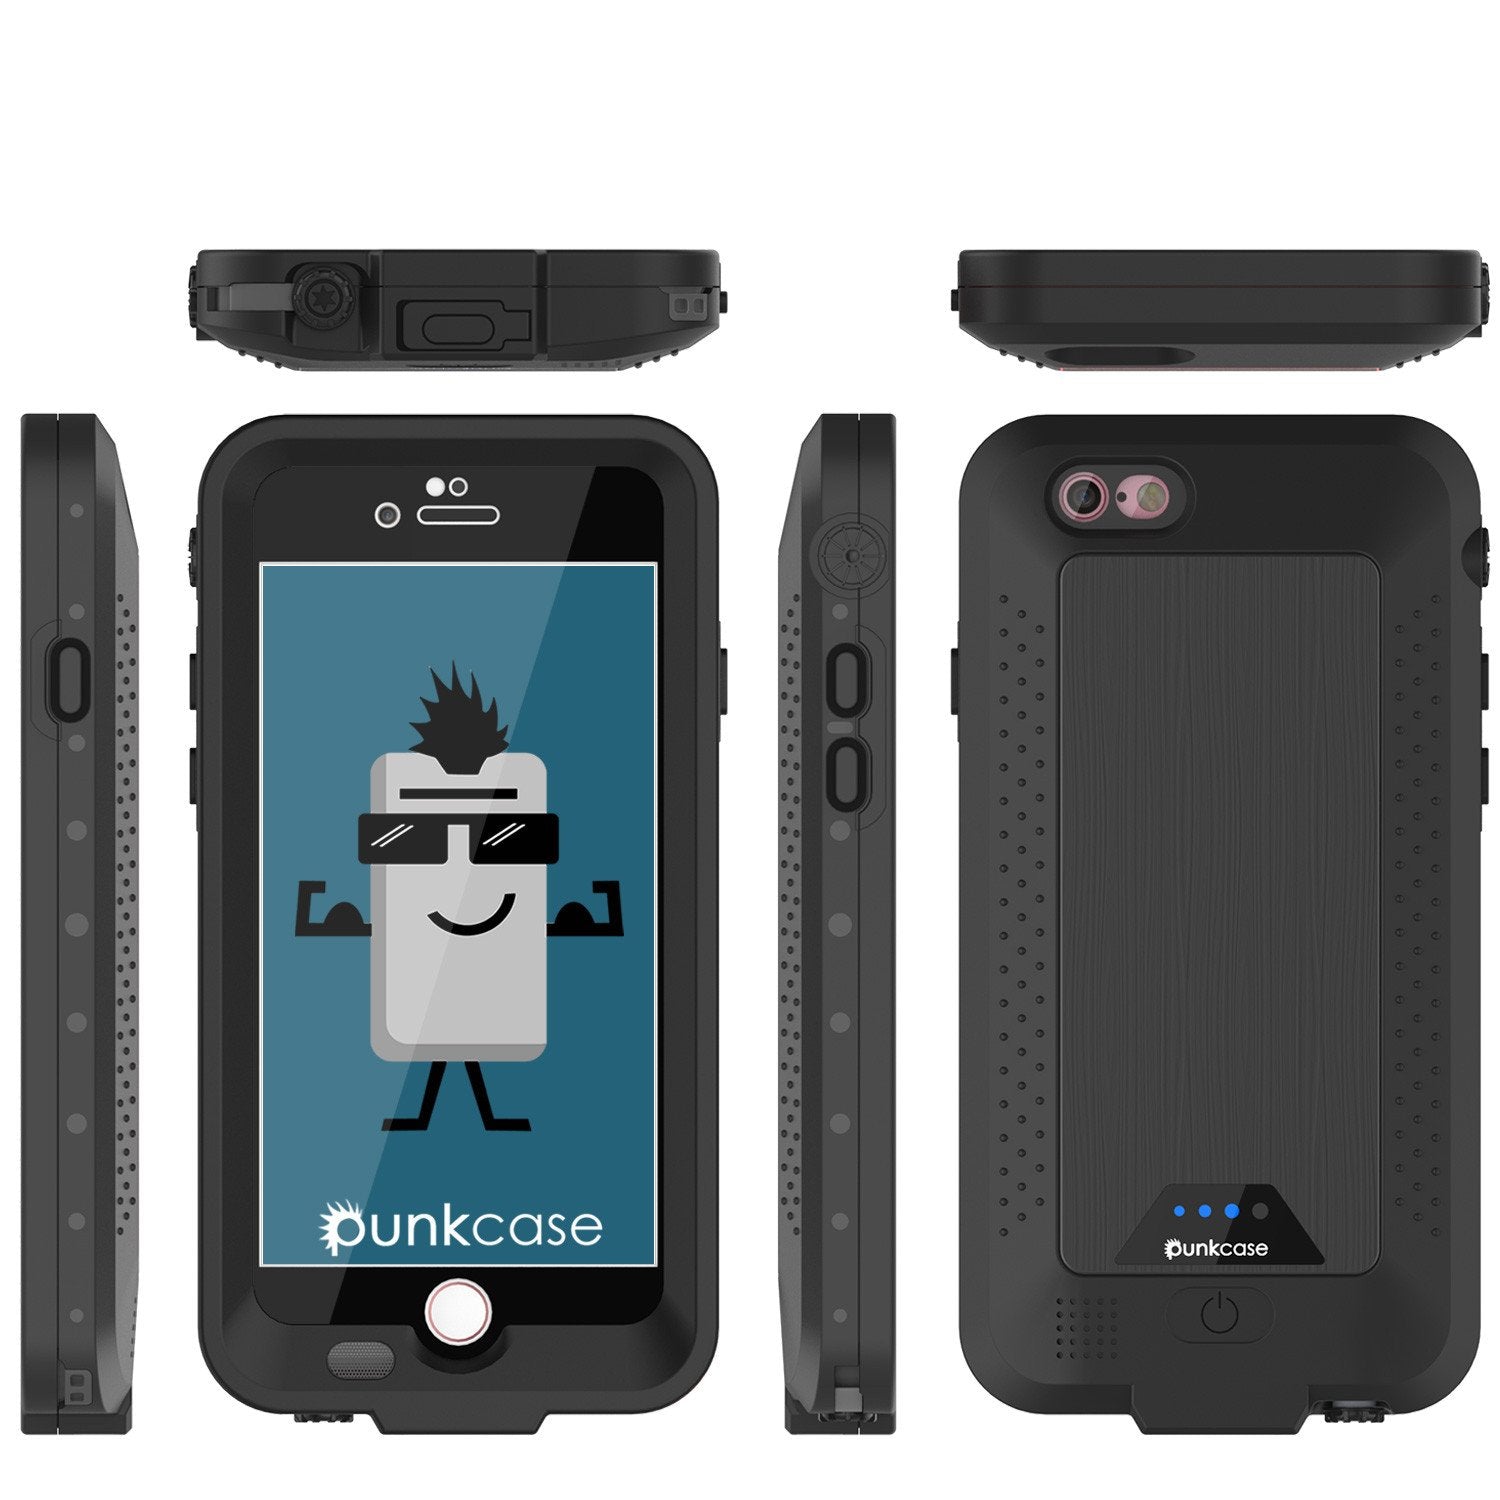 PunkJuice iPhone 6/6s Battery Case Black Waterproof Power Juice Bank w/ 2750mAh  | Fastcharging